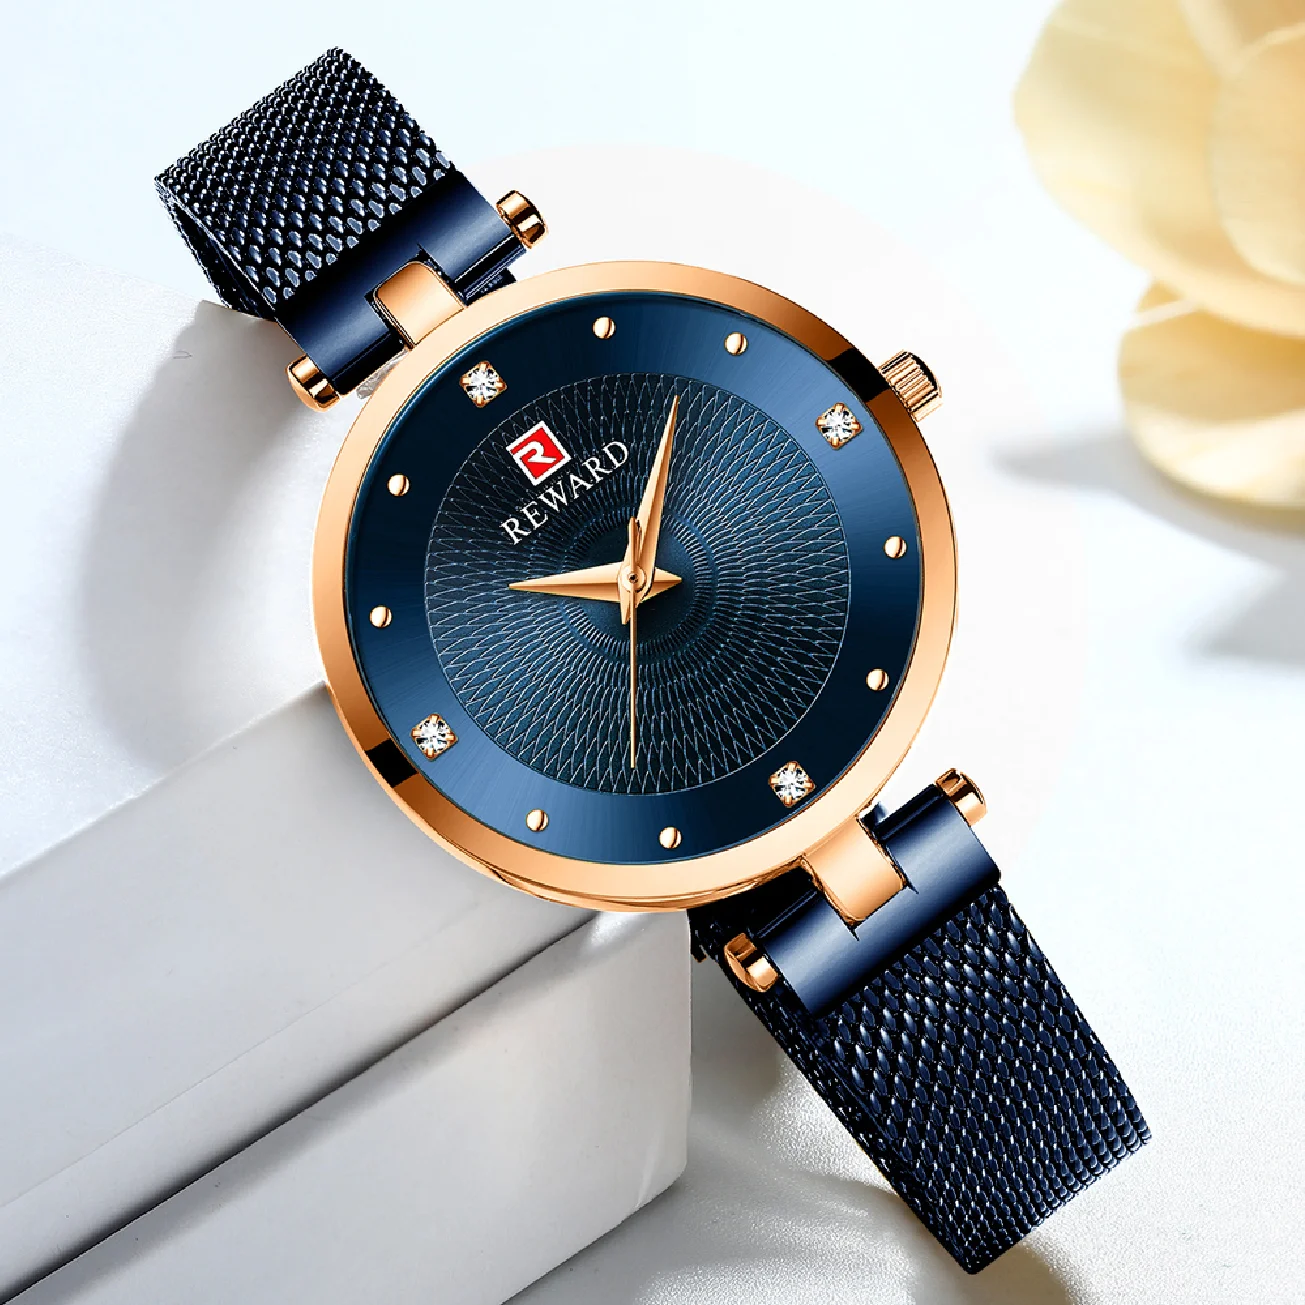 REWARD Luxury Women Watches Fashion Dress Quartz Watch Ladies Stainless Steel Waterproof Wrist Watch Lady Clock Relogio Feminino enlarge